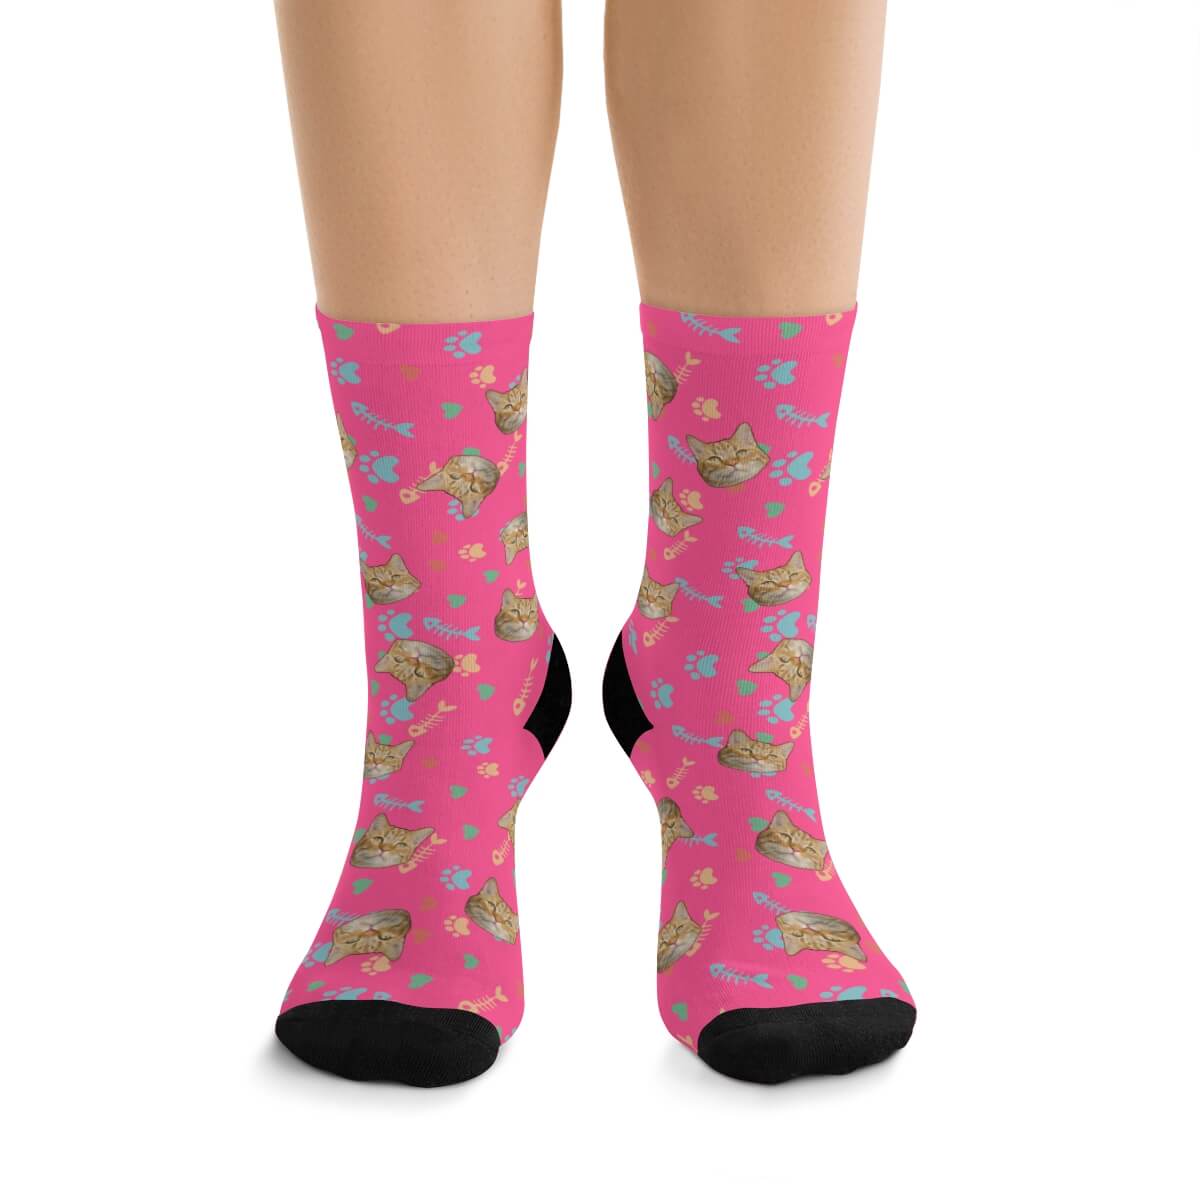 Custom Socks - Hearts, Fish Bones, Paws (color)